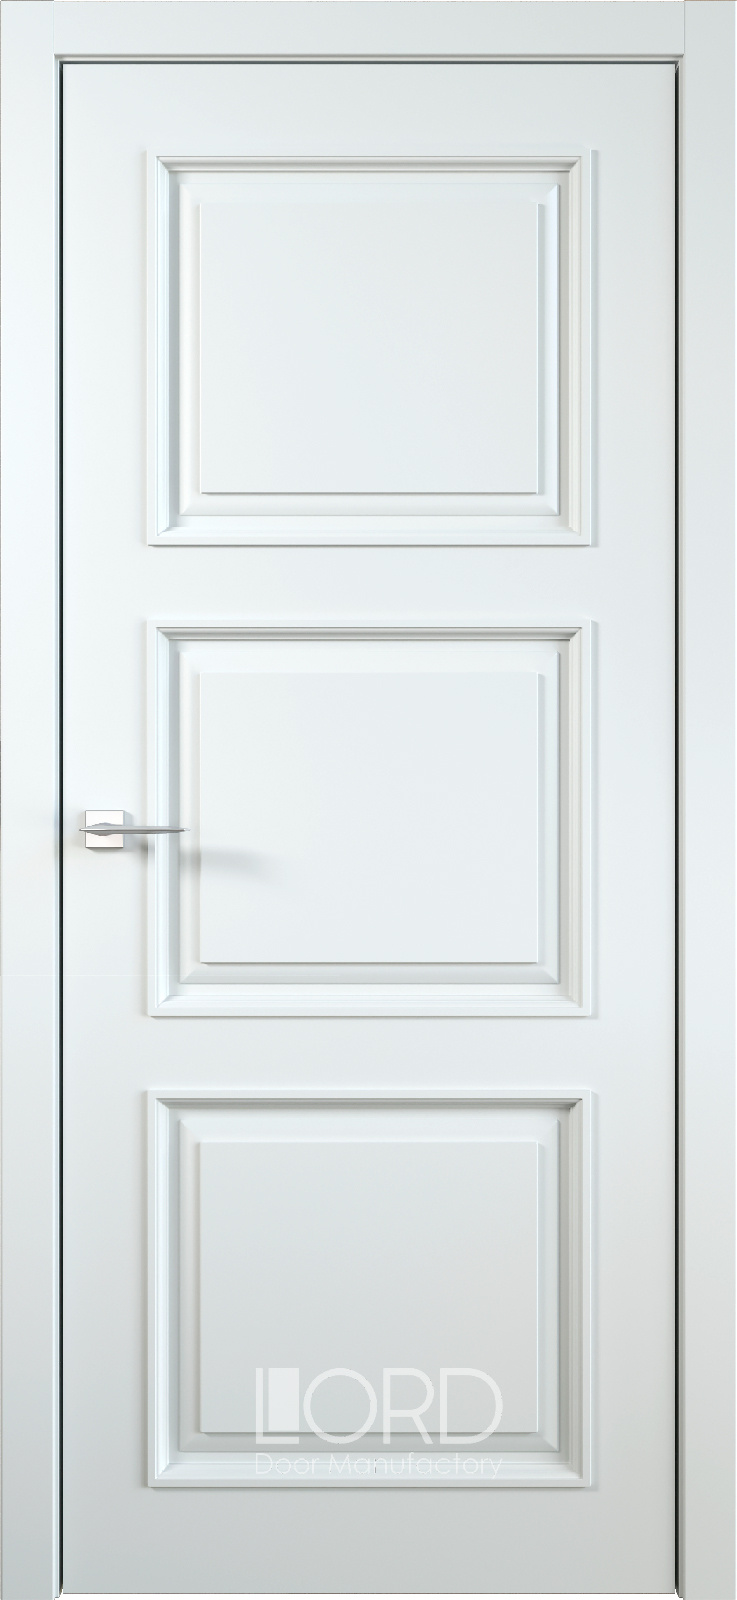 Лорд Межкомнатная дверь М3 ДГ, арт. 22895 - фото №1